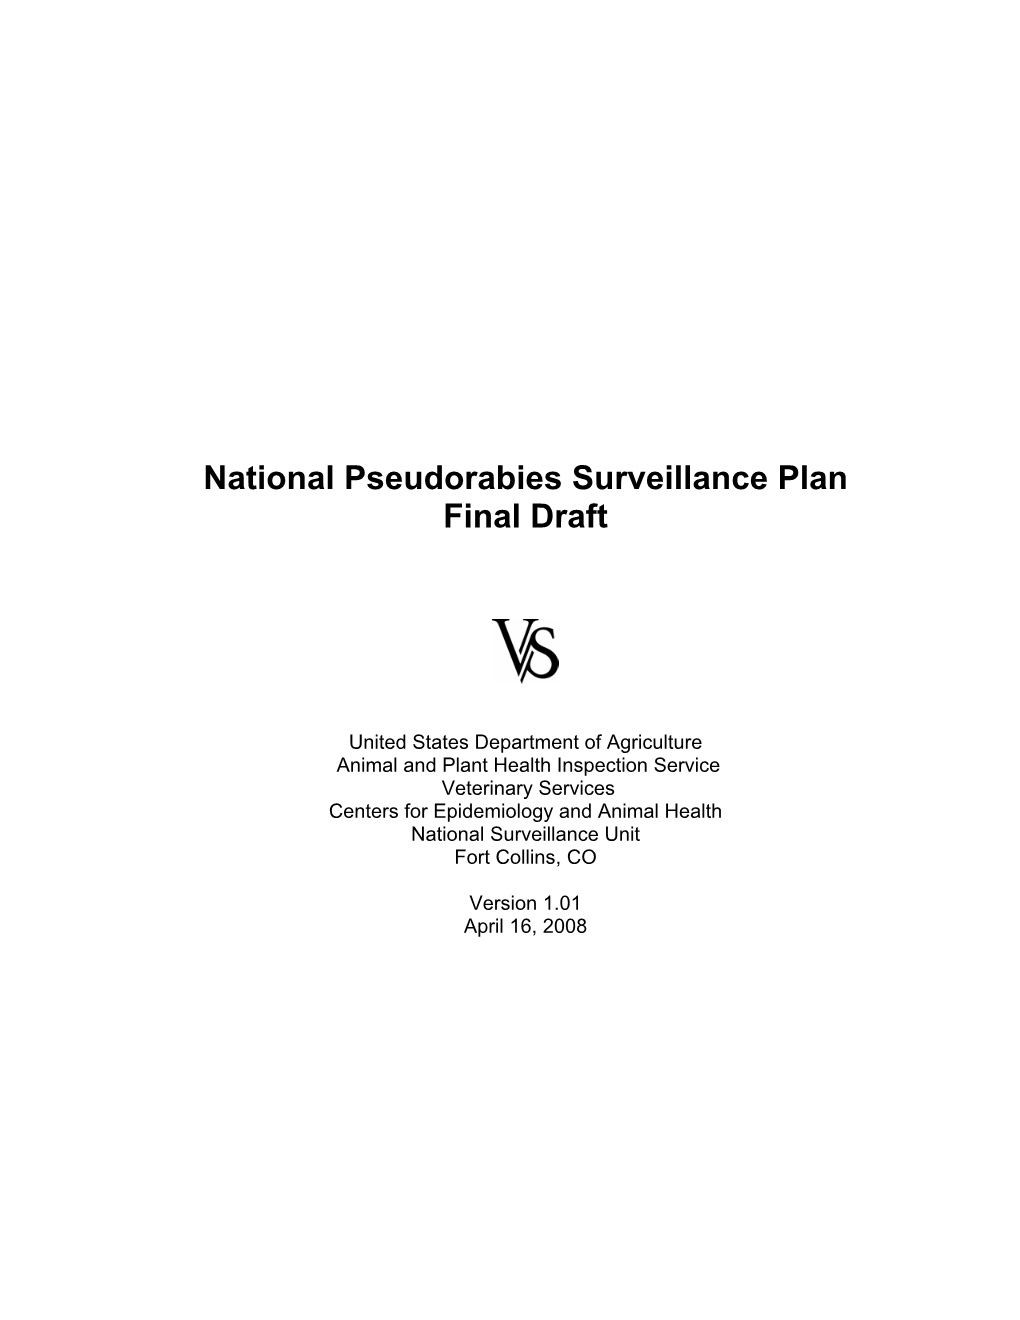 Pseudorabies Surveillance Plan Final Draft